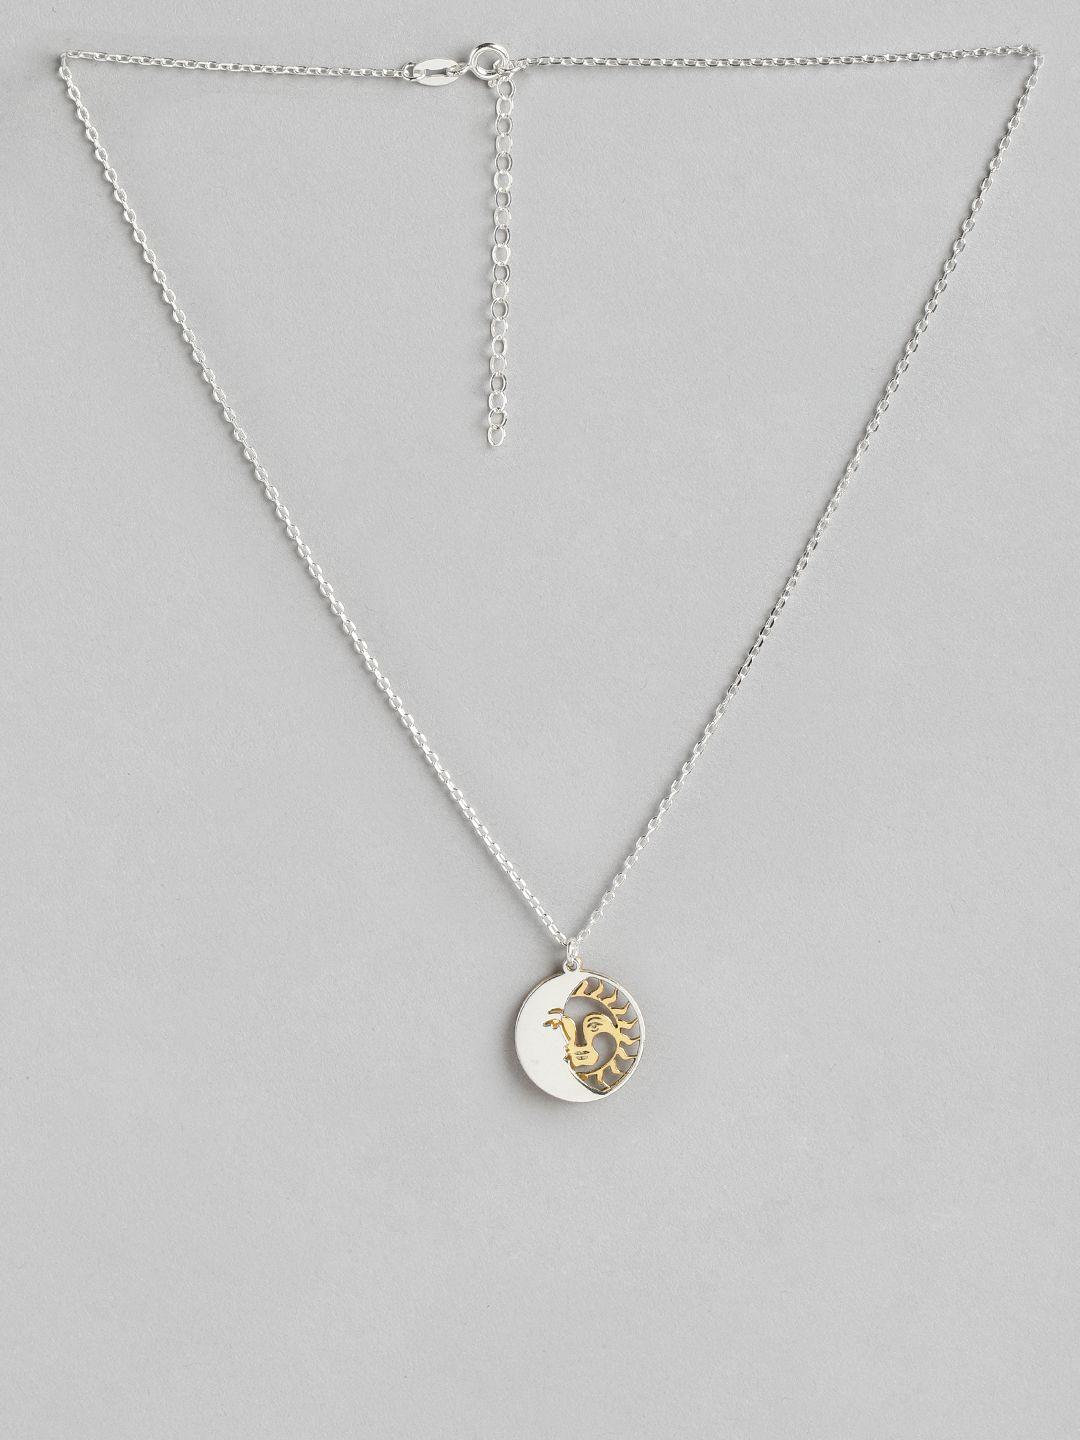 carlton-london-rhodium-plated-pendant-with-chain